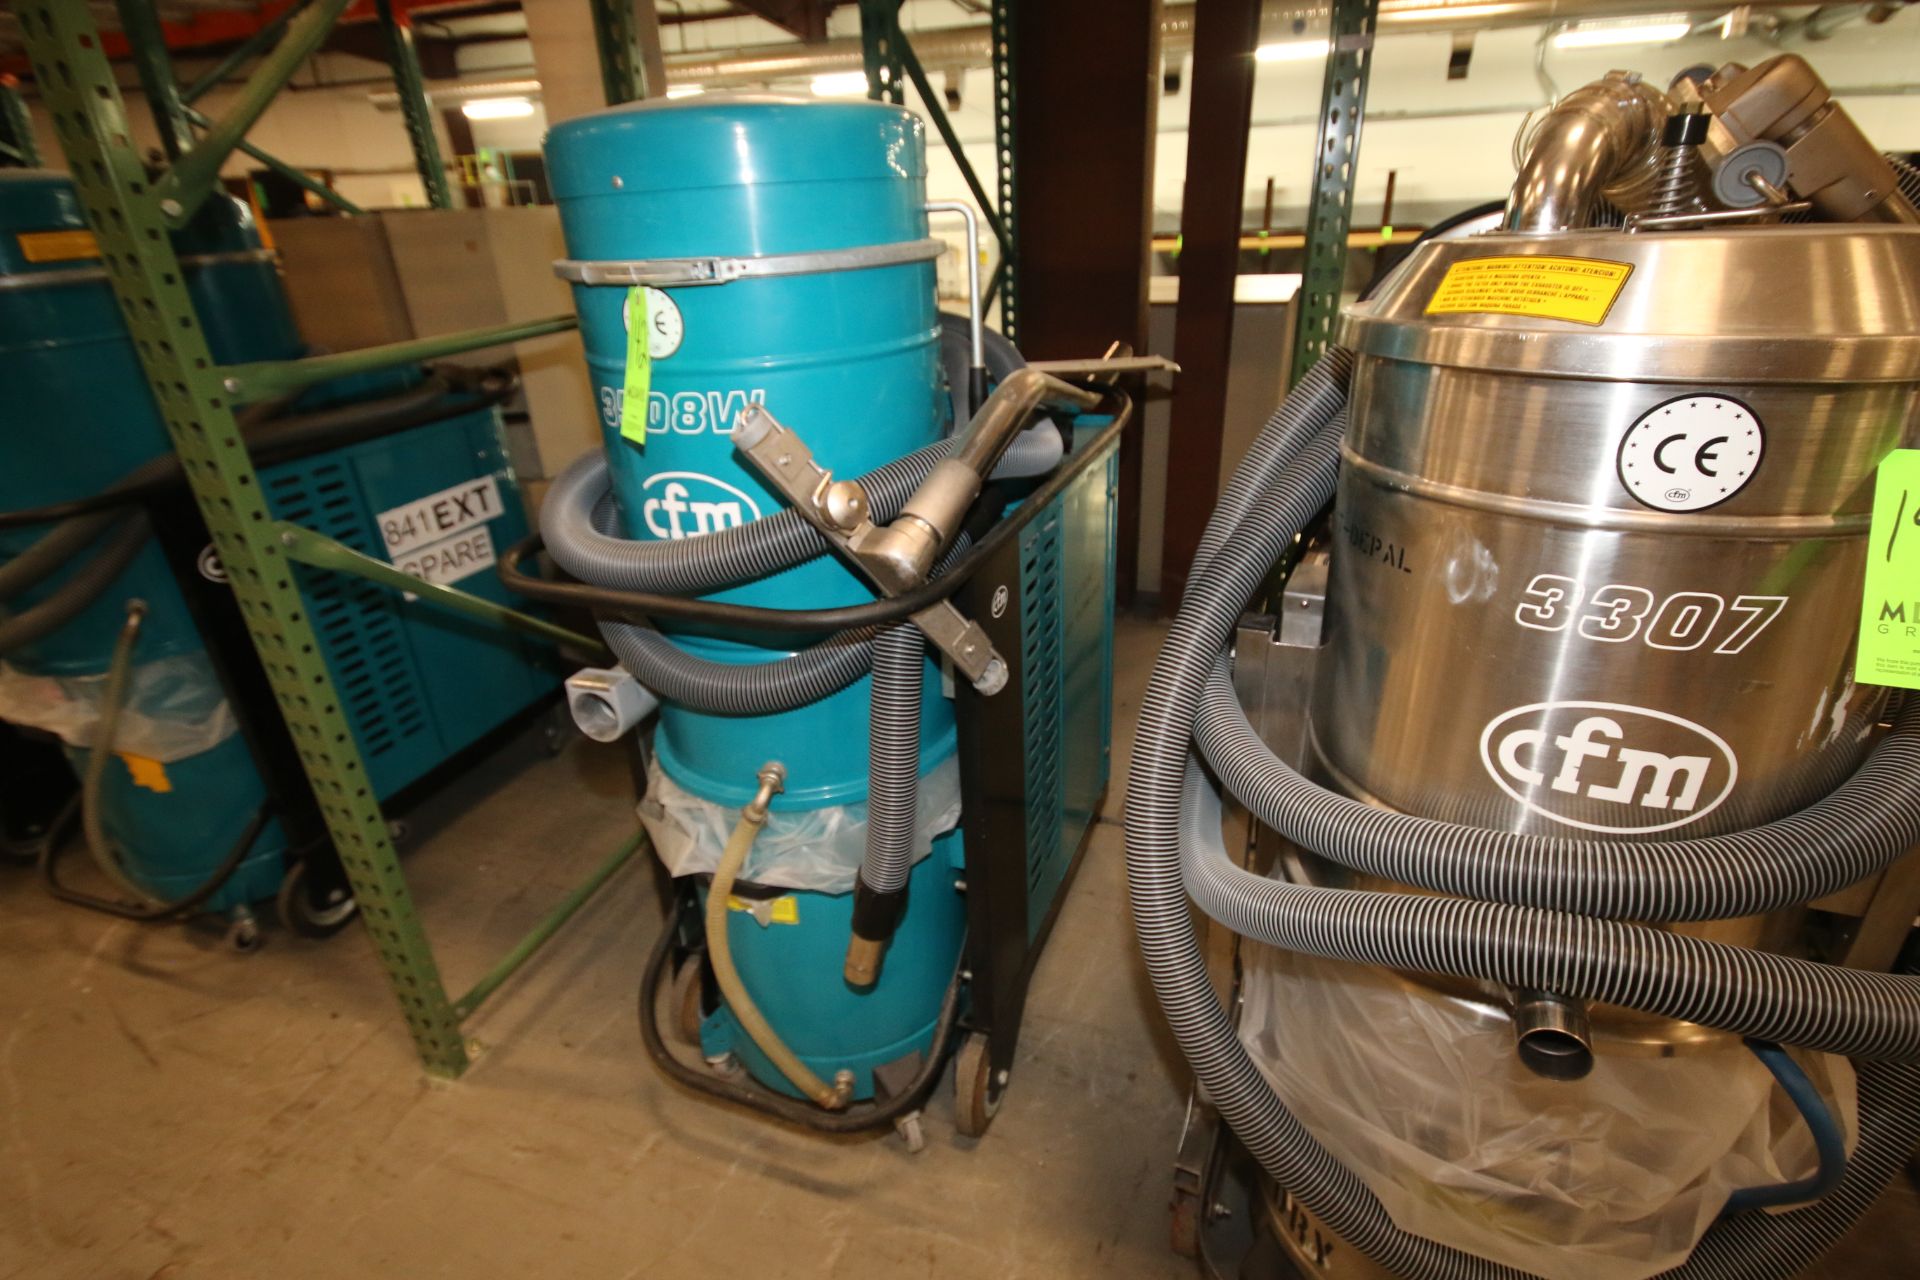 2005 Nilfish Advance CFM Portable Industrial Vacuum Cleaner, Type 3508W, S/N 05AF952, 6.3 KW, 210